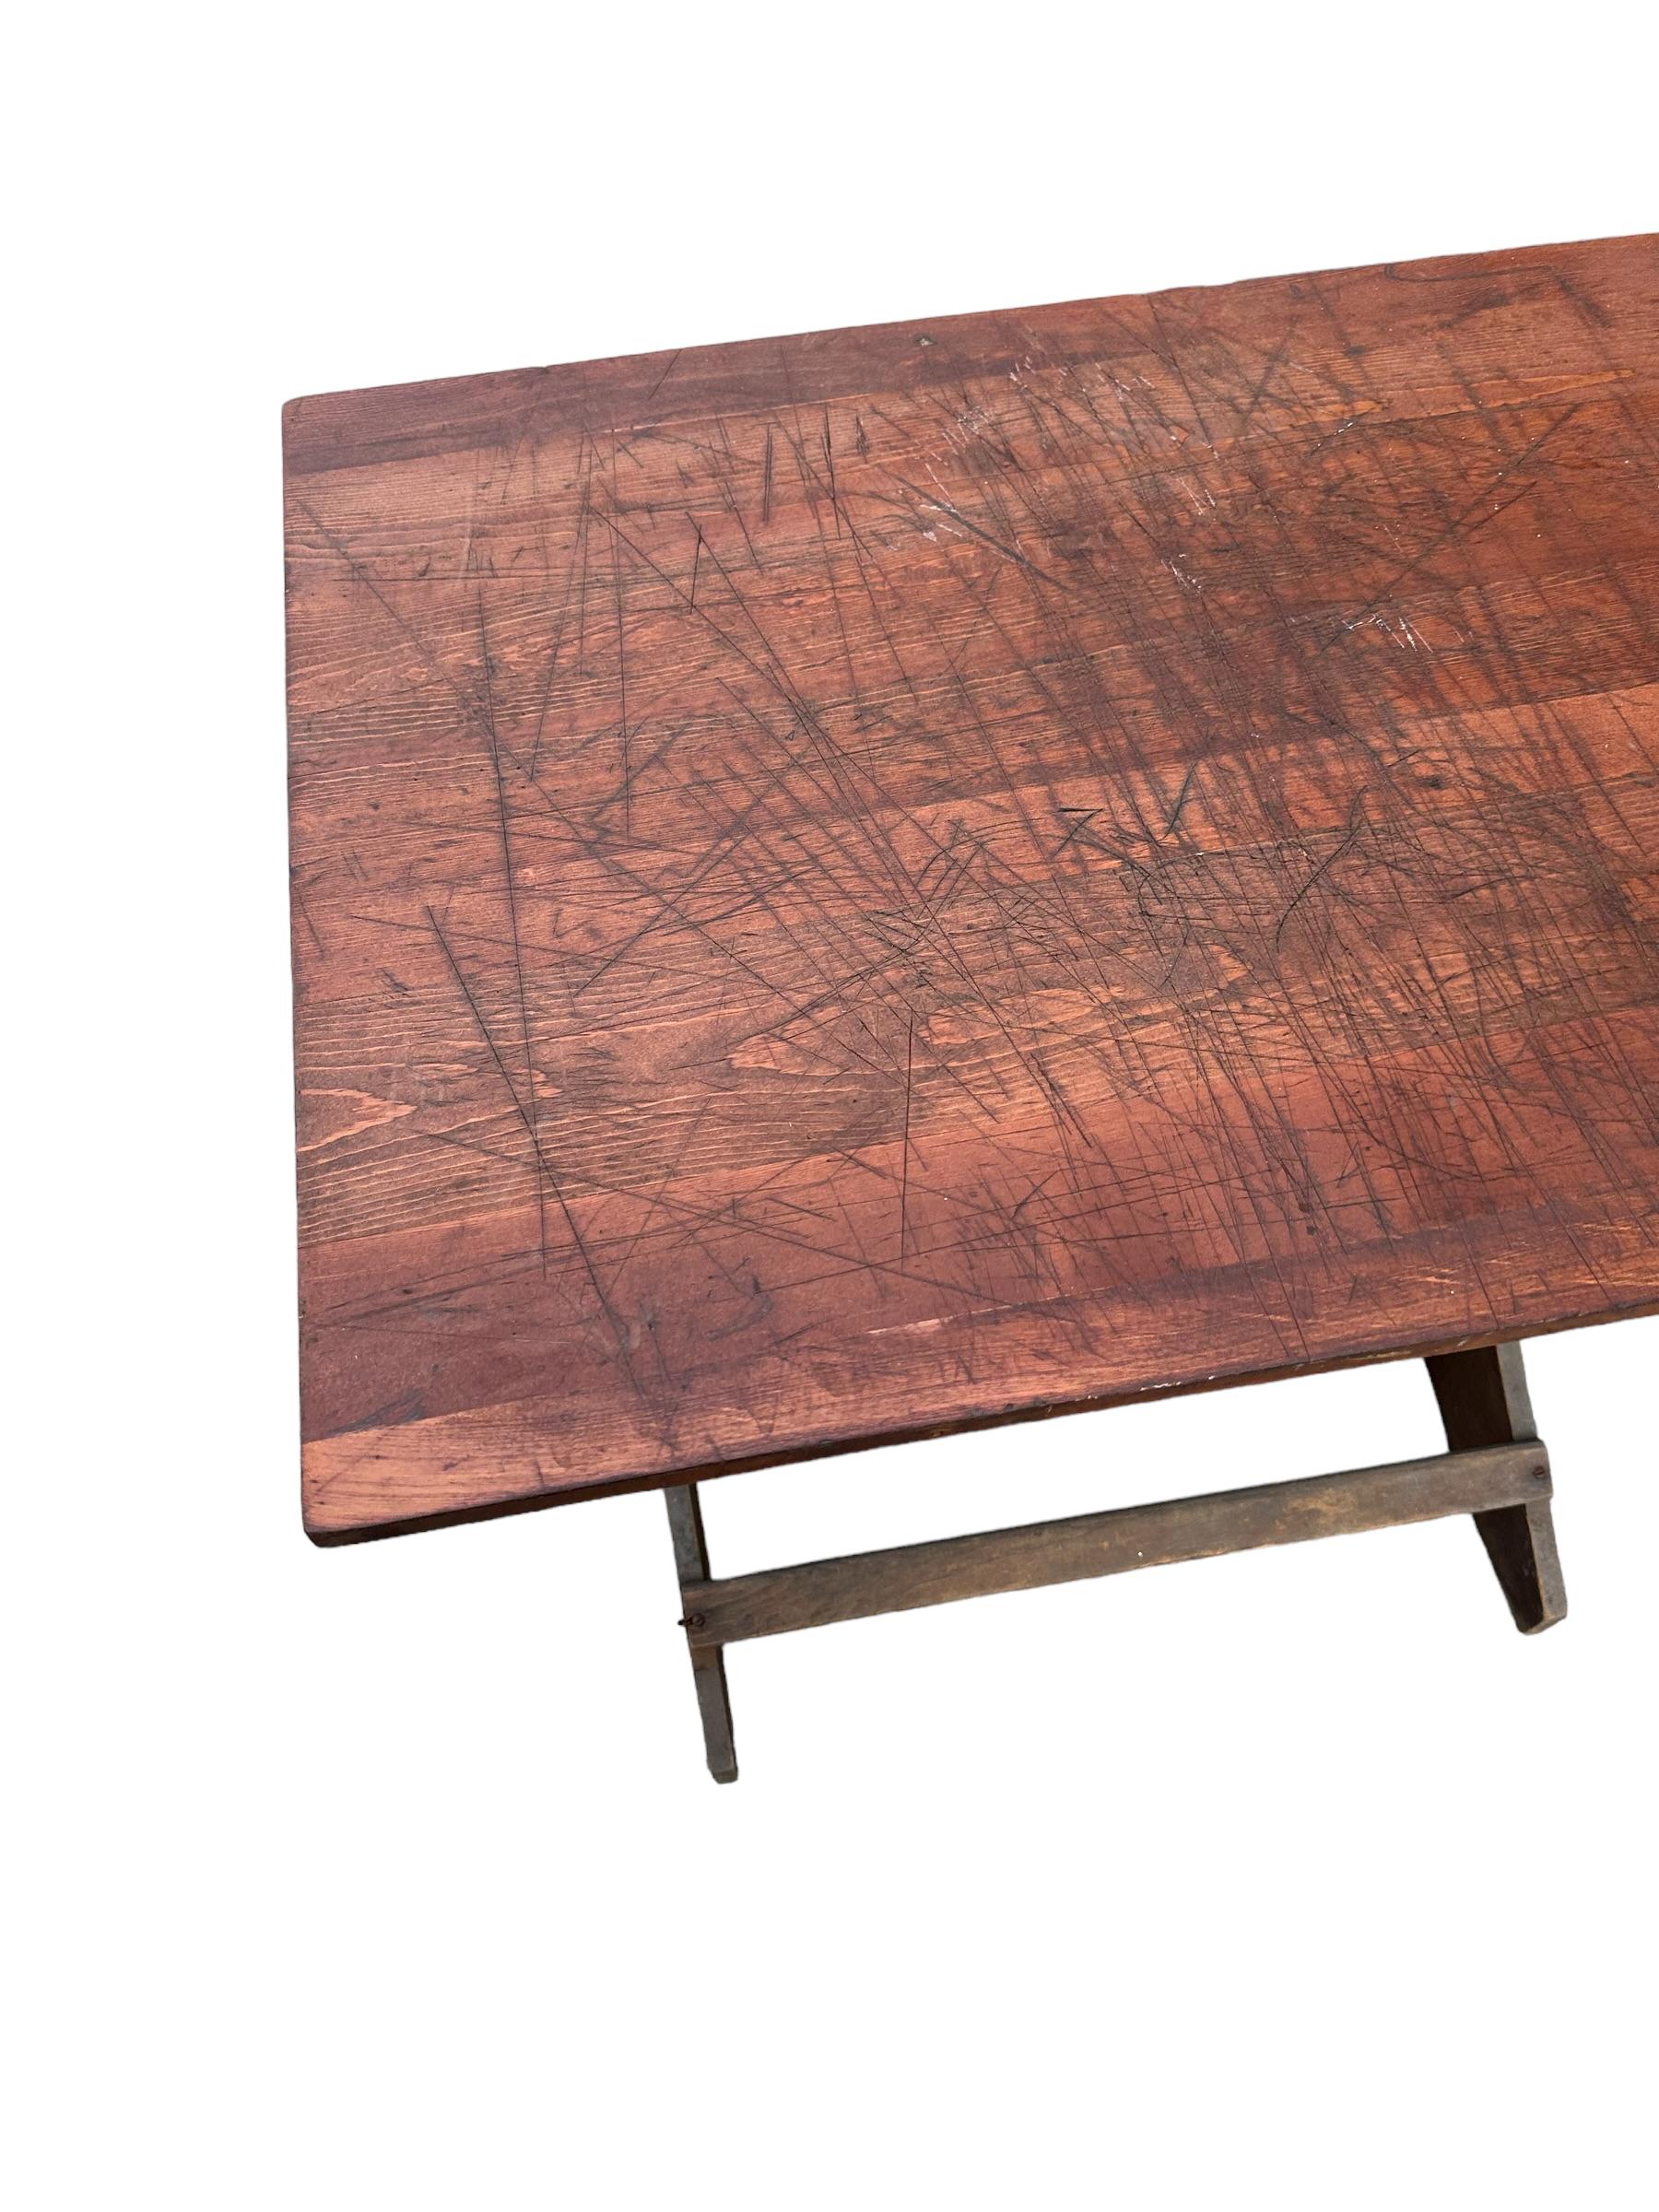 American Anco Bilt Antique Solid Wood Adjustable Drafting Table